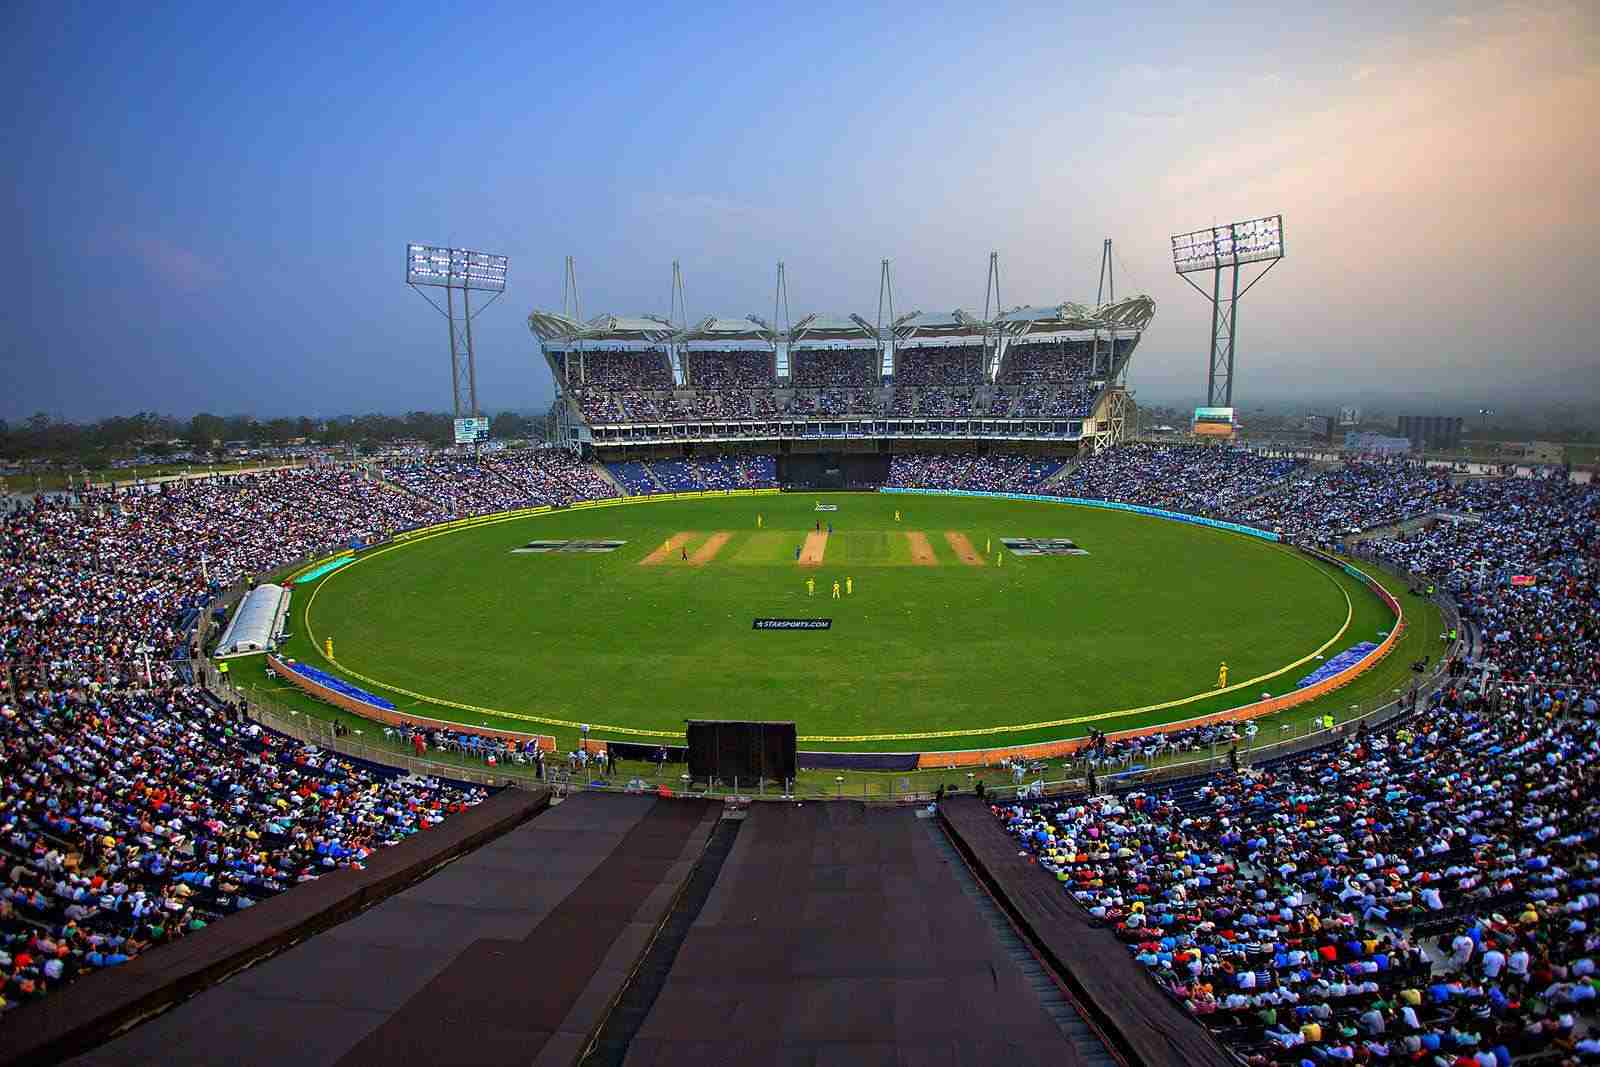 Maharashtra Cricket Association Stadium evening view